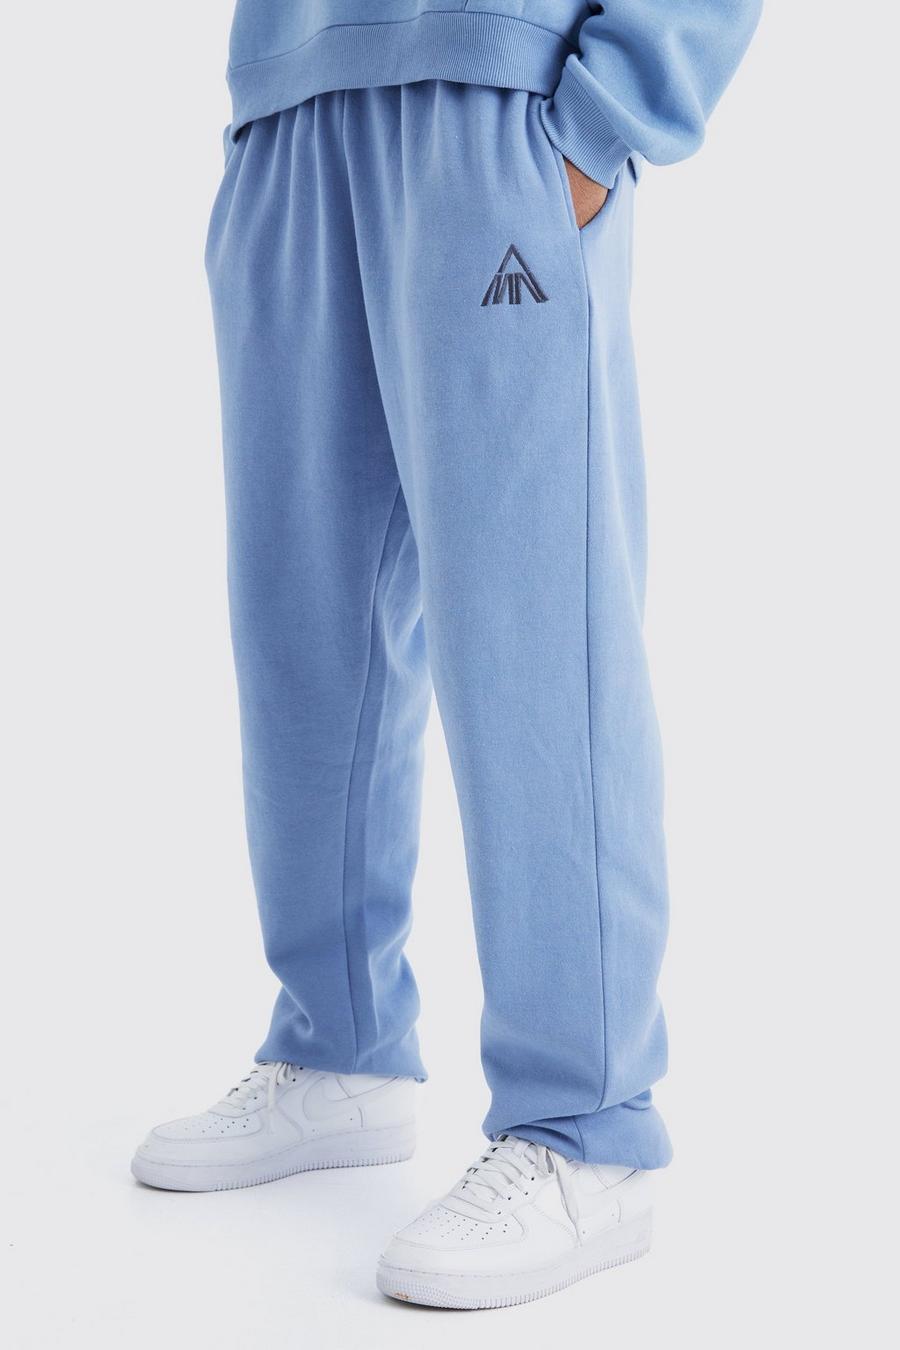 Pantalón deportivo Tall MAN básico oversize, Dusty blue